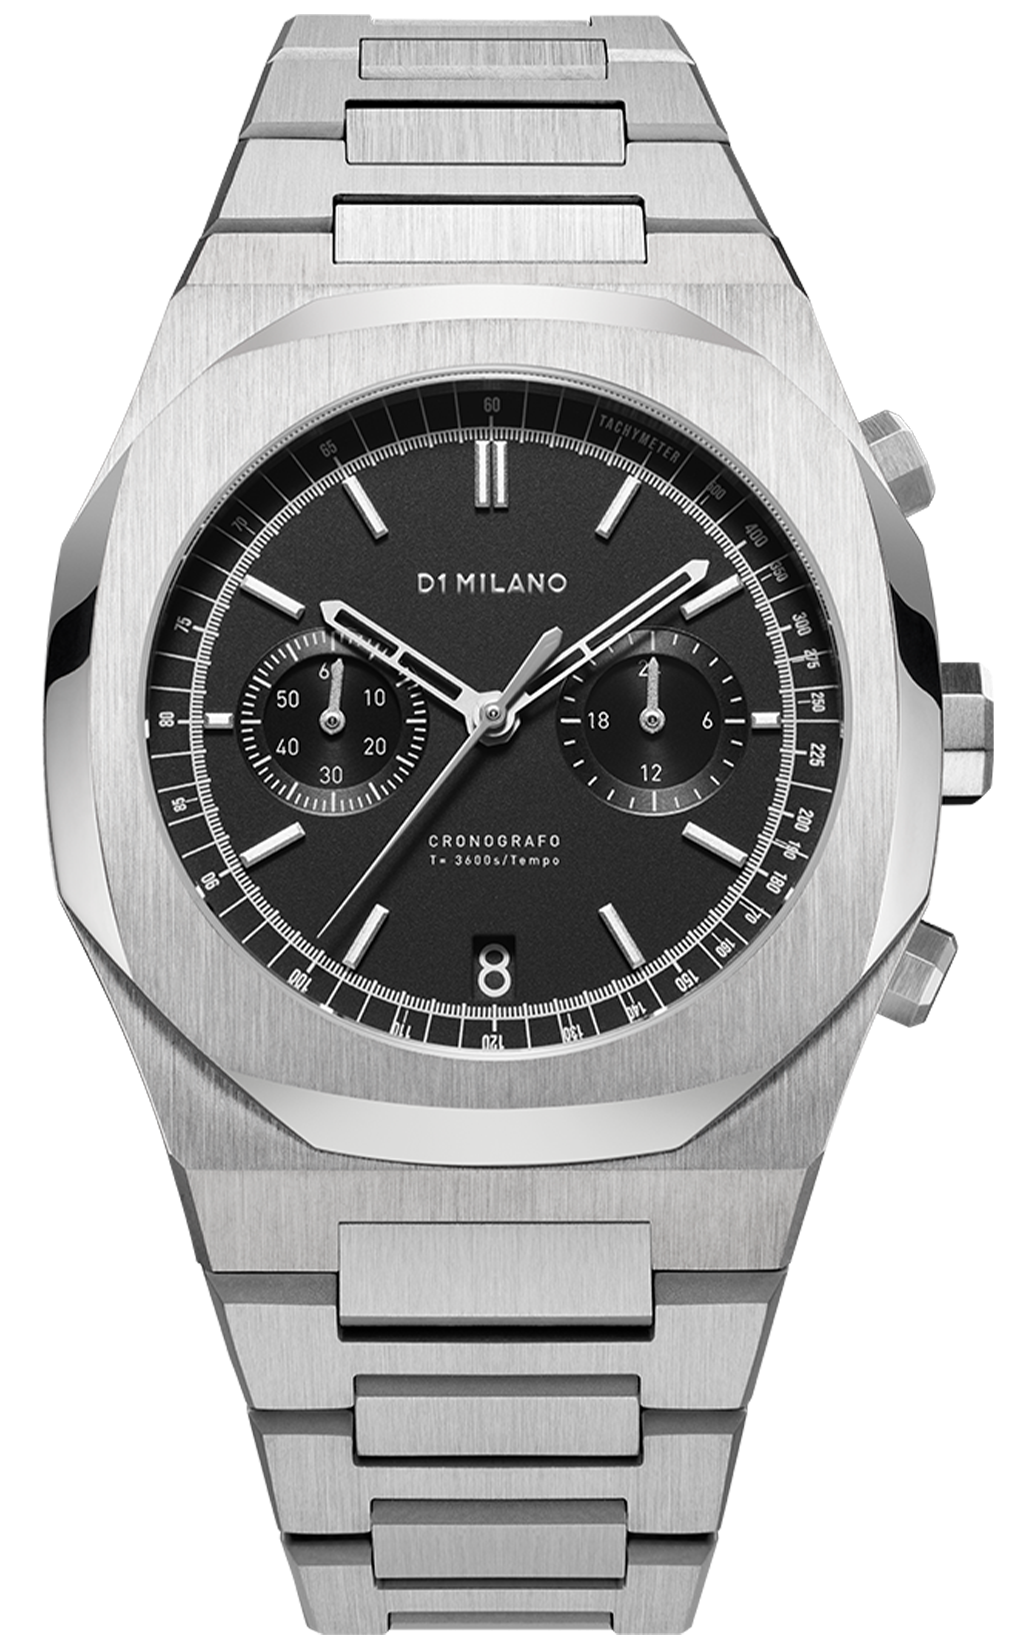 Photos - Wrist Watch Milano D1  Watch Cronografo DLM-001 